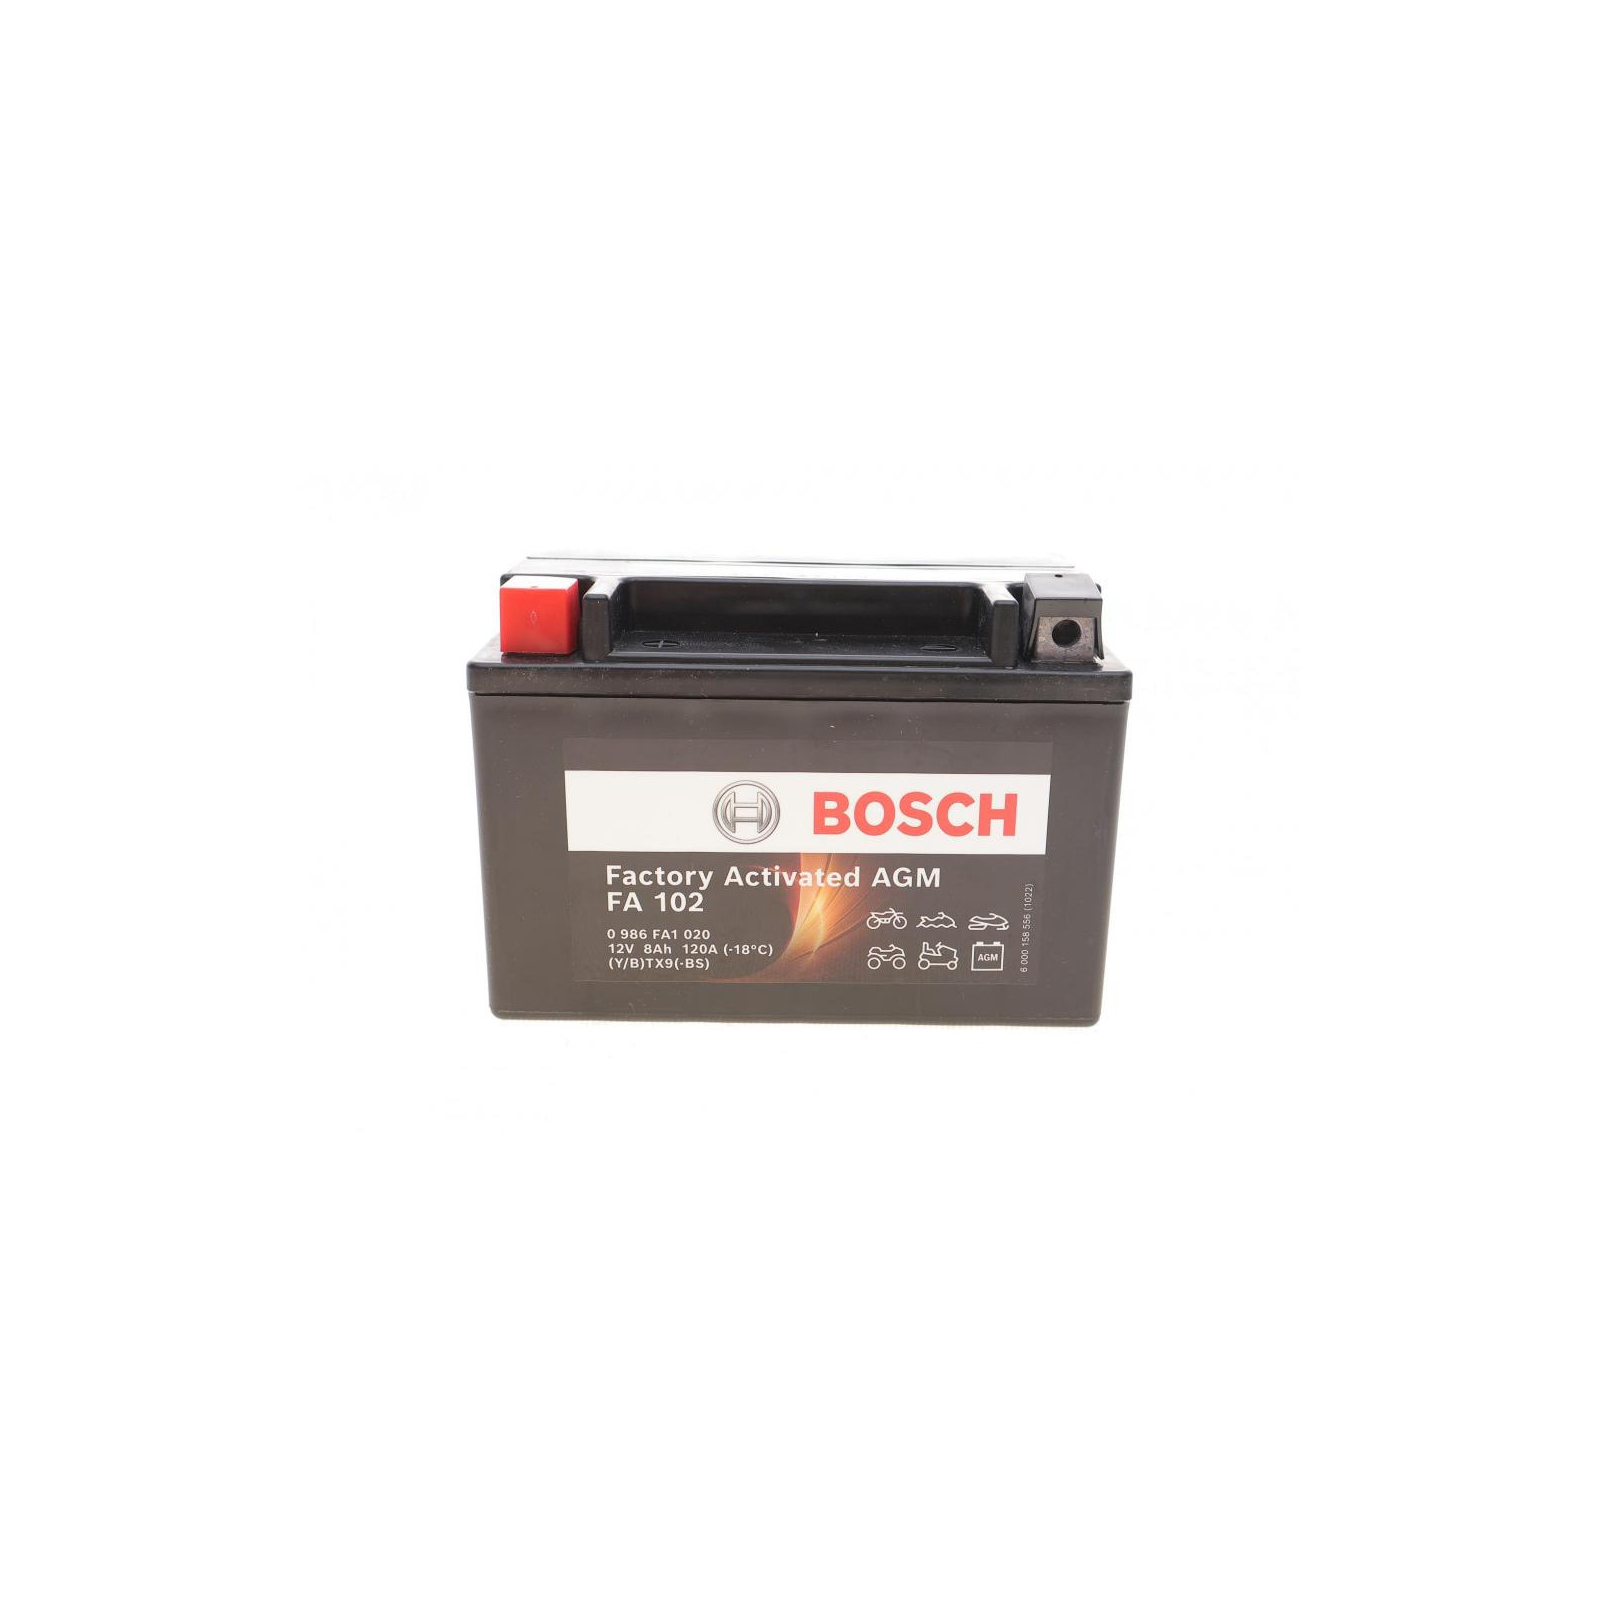 Акумулятор автомобільний Bosch 0 986 FA1 020